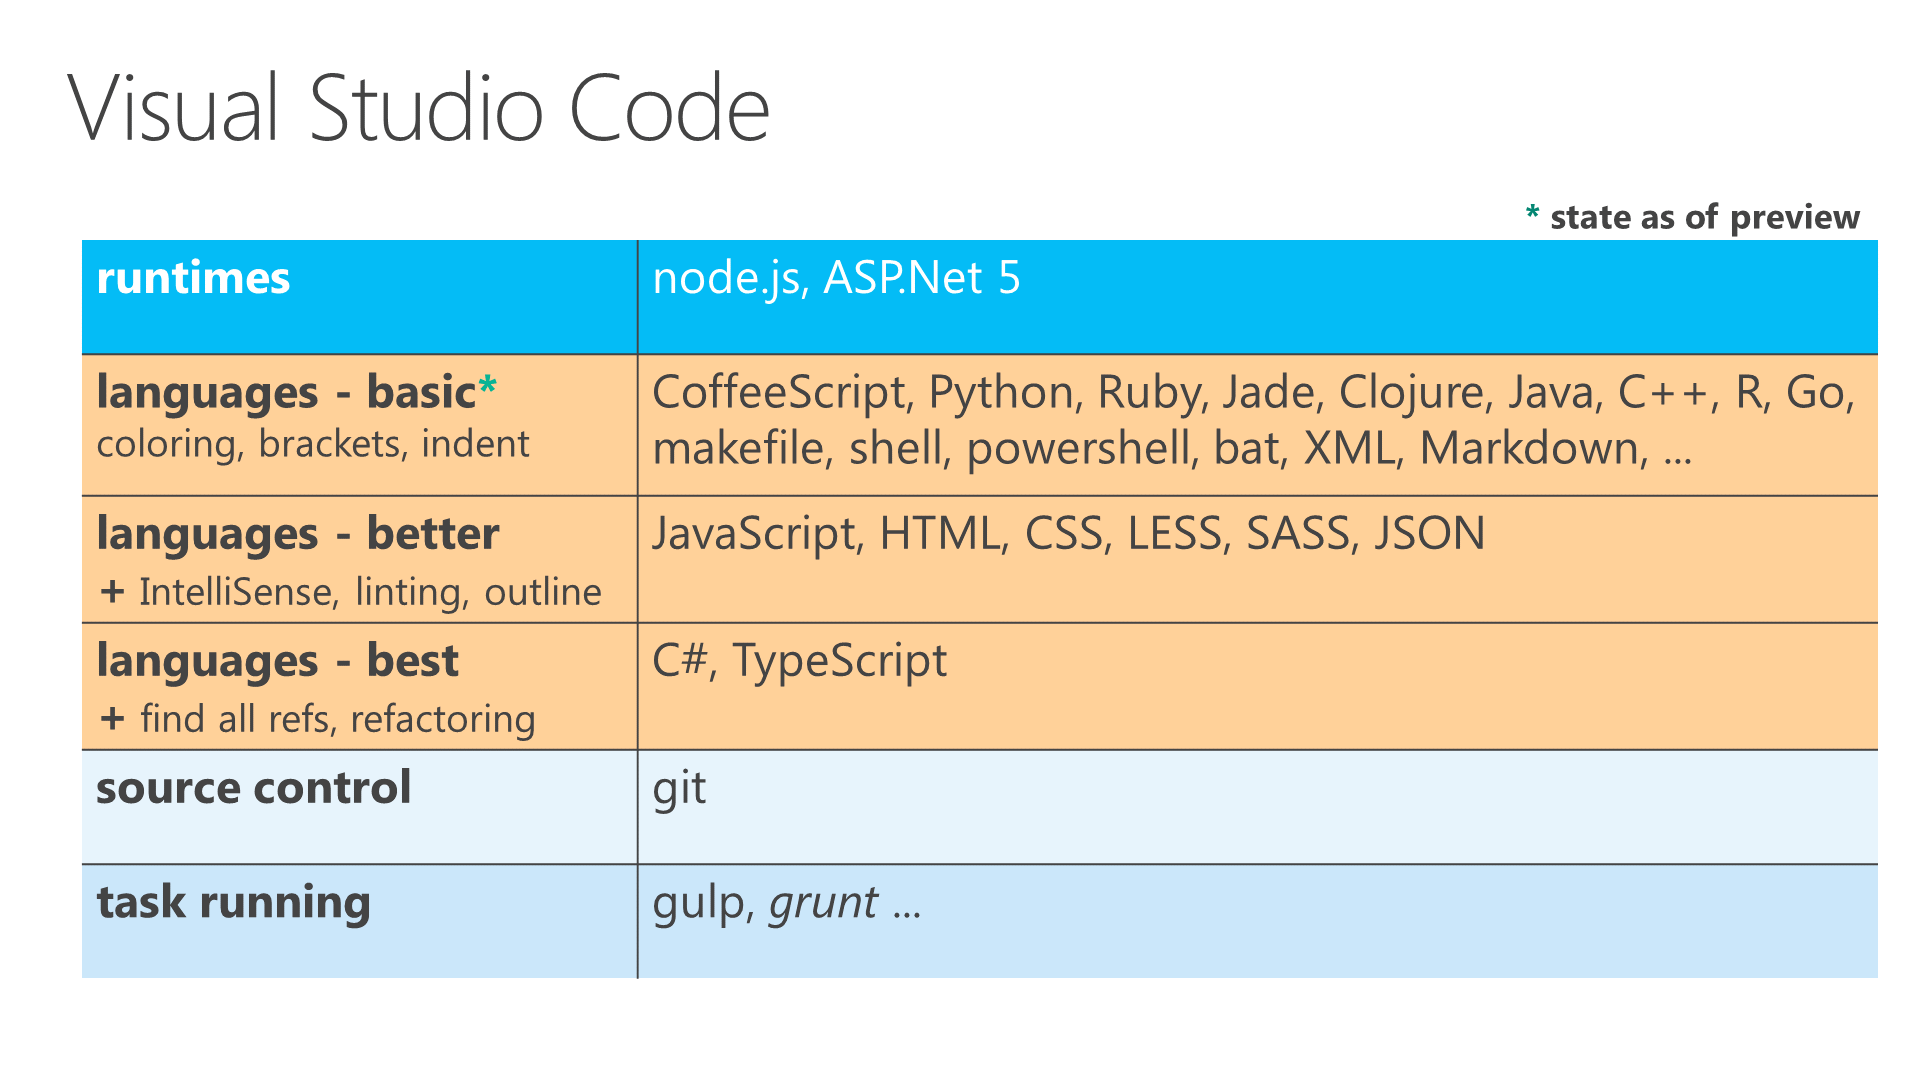 Visual Studio CodeF Build 20151ڂ̃L[m[gBIntelliSensei⊮@\j^fobO^Git|WgAgĂBWindowsłȂAMacp^LinuxpŒ񋟂BF Build 2015̃ZbV3-680uVisual Studio CodeFA Deep Dive on the Redefined Code Editor for OS X, Linux and Windowsv̎BΉĂ錾ł́AŒłF₩̑ΉȂǂ@\ibasicjBbetterƂĂ錾ł́AIntelliSenseAEgC@\ȂǂgBbestƂȂĂ錾ł̓t@N^O@\ȂǂĂB